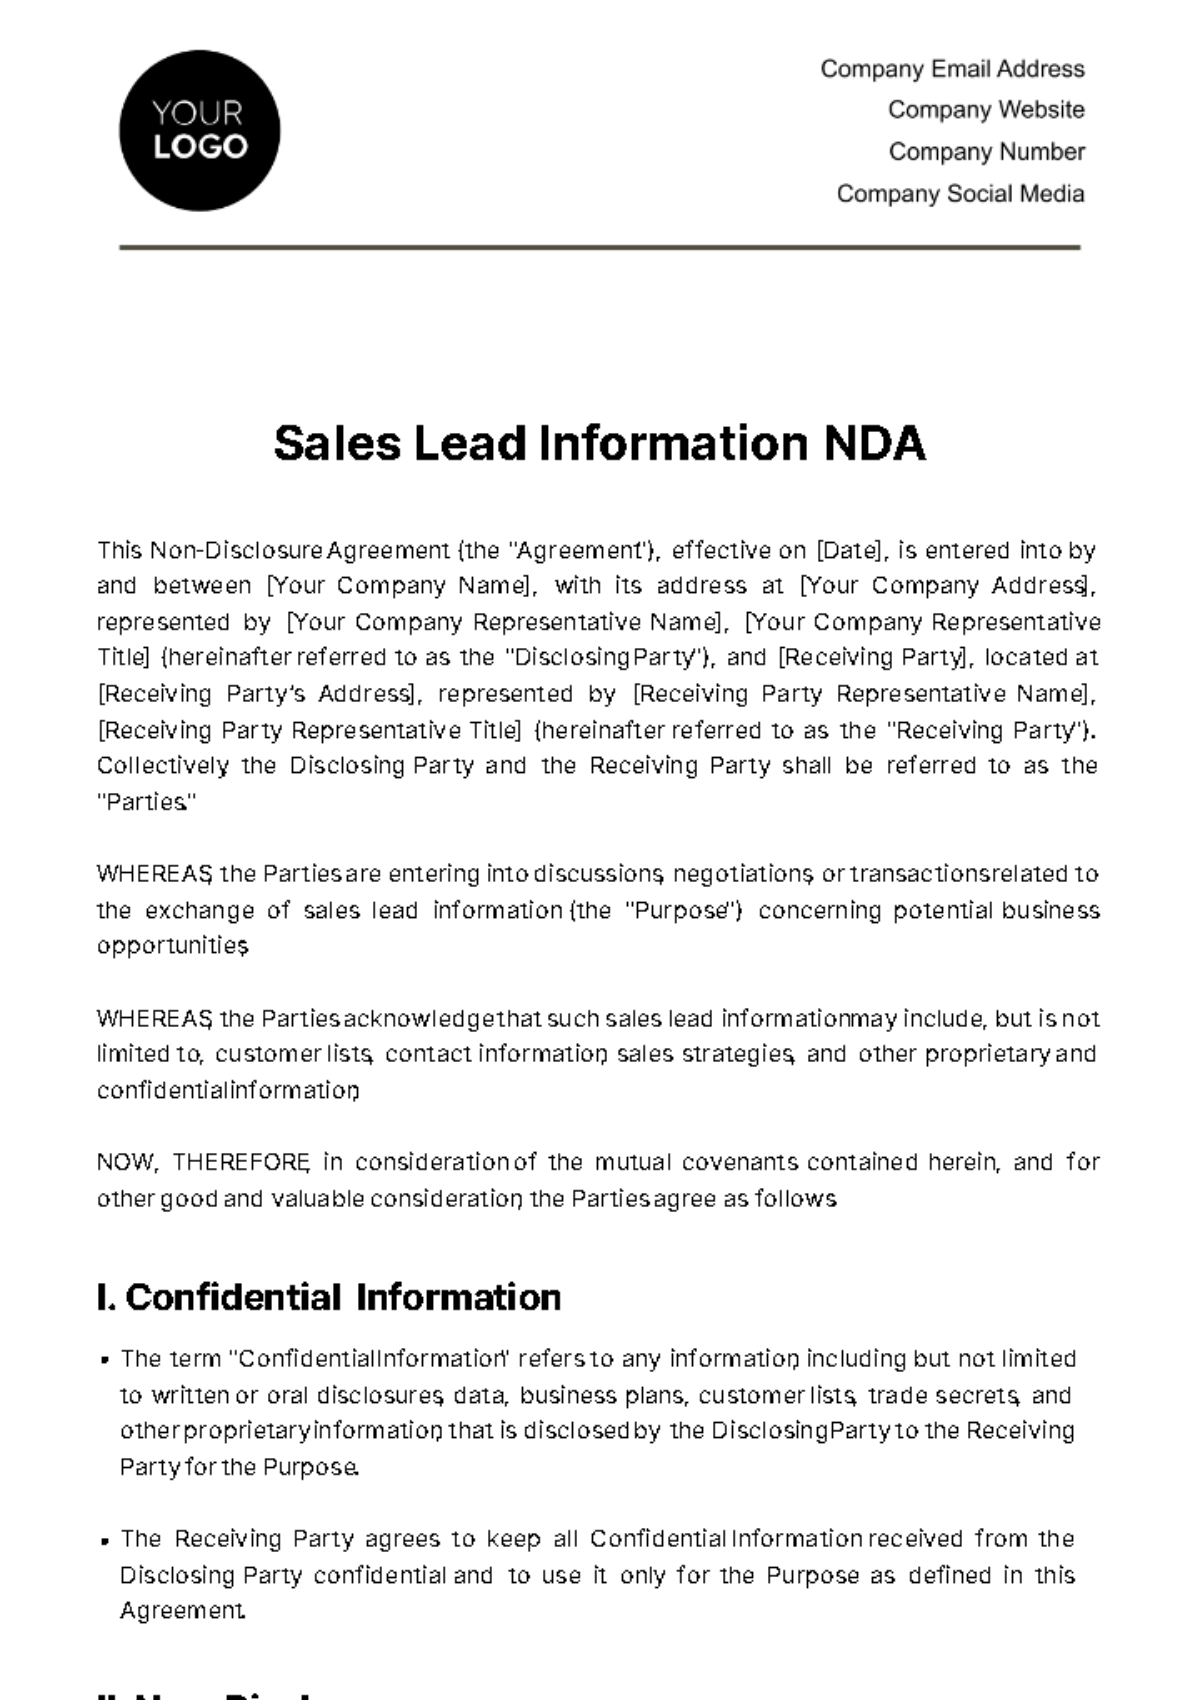 Sales Lead Information NDA Template